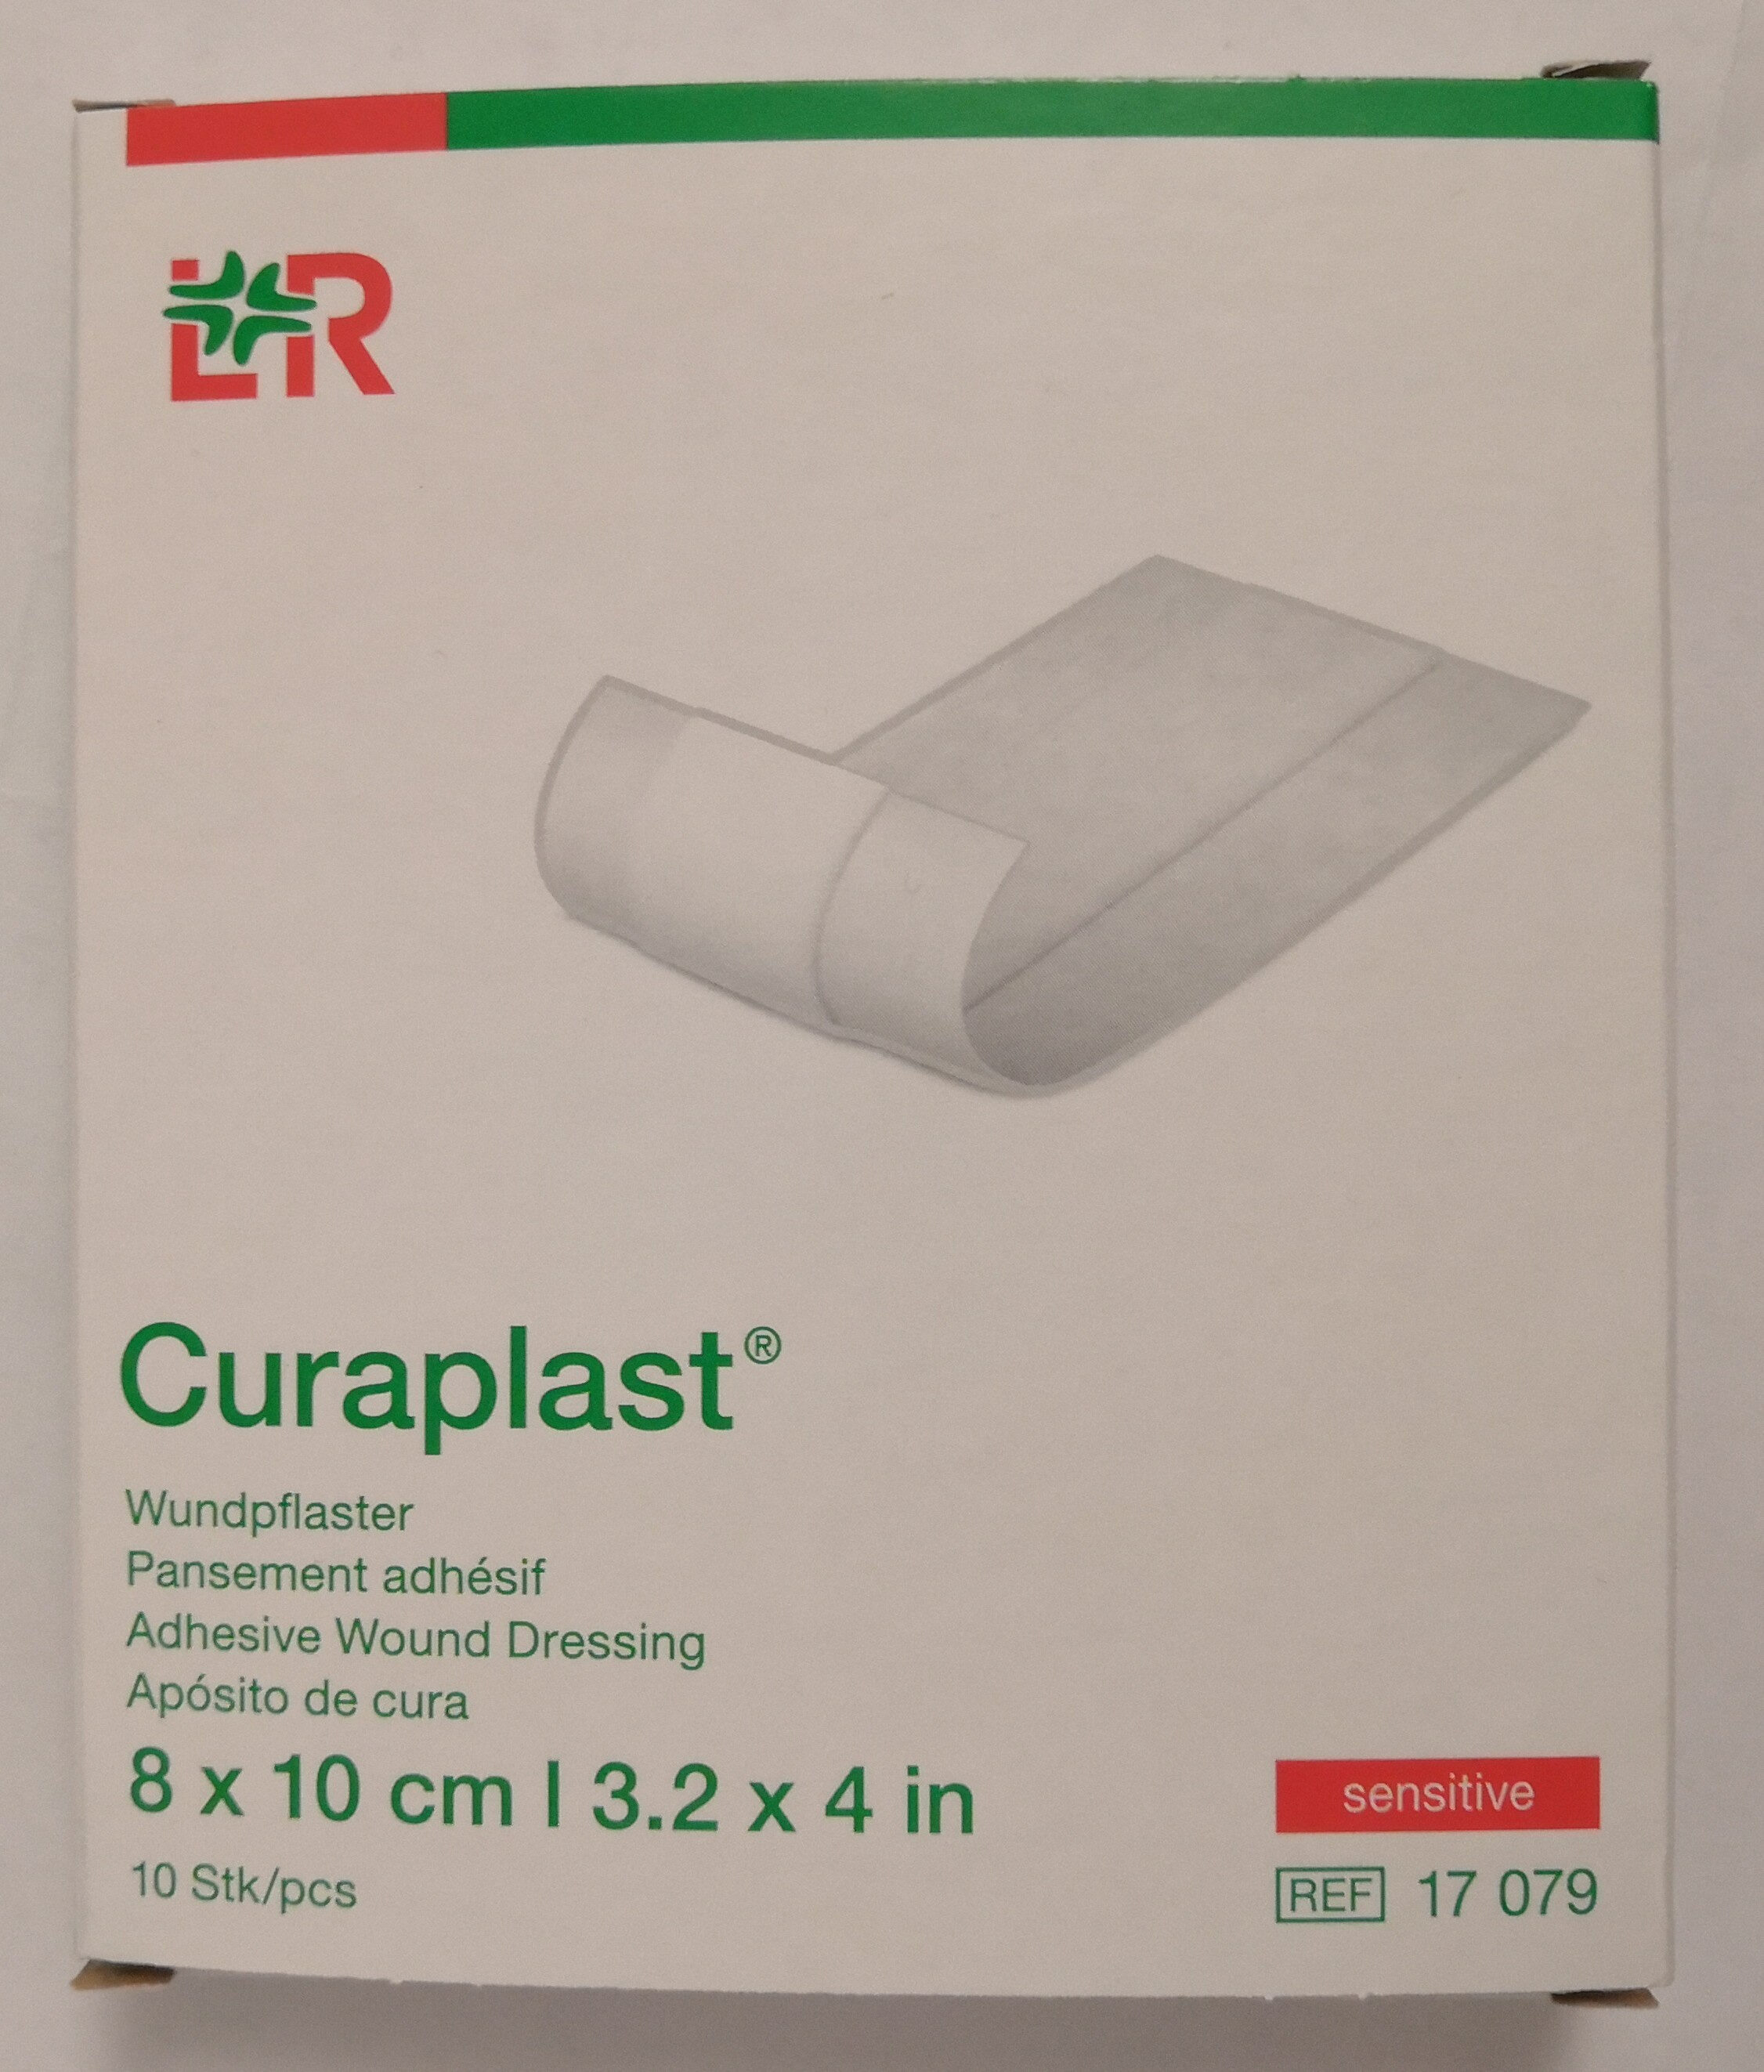 Curaplast 8 x 10 cm sensitive - Product - de